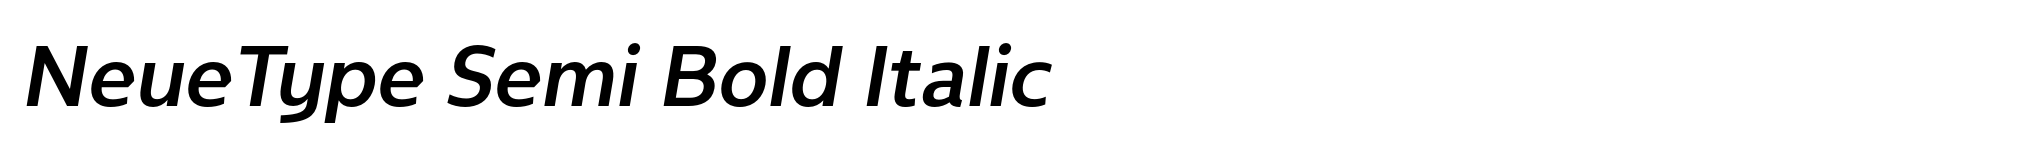 NeueType Semi Bold Italic image